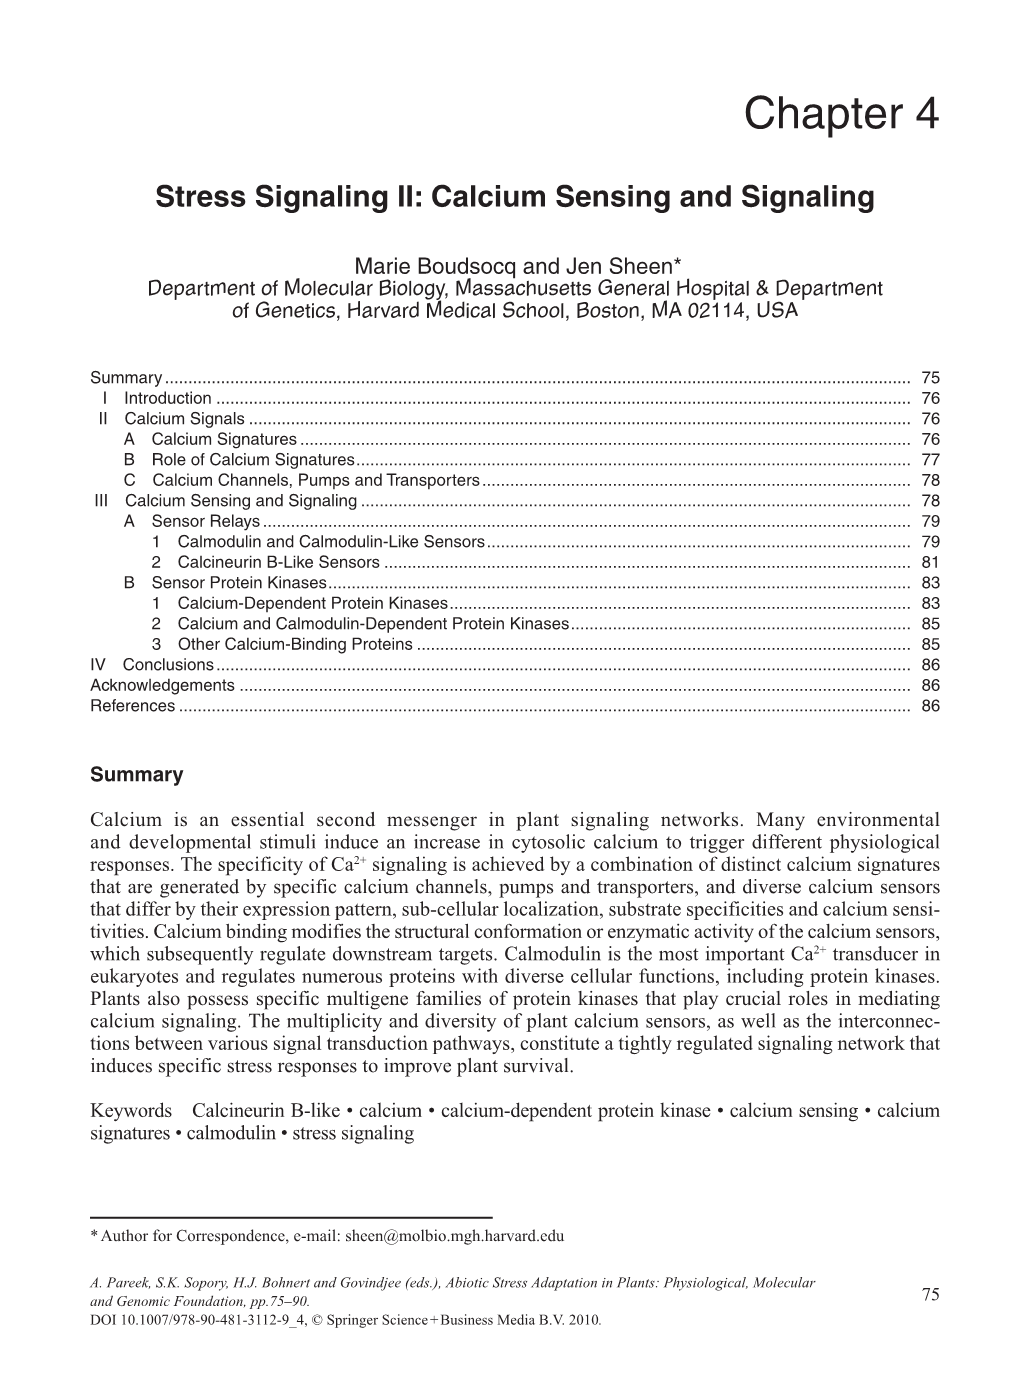 Stress Signaling II: Calcium Sensing and Signaling